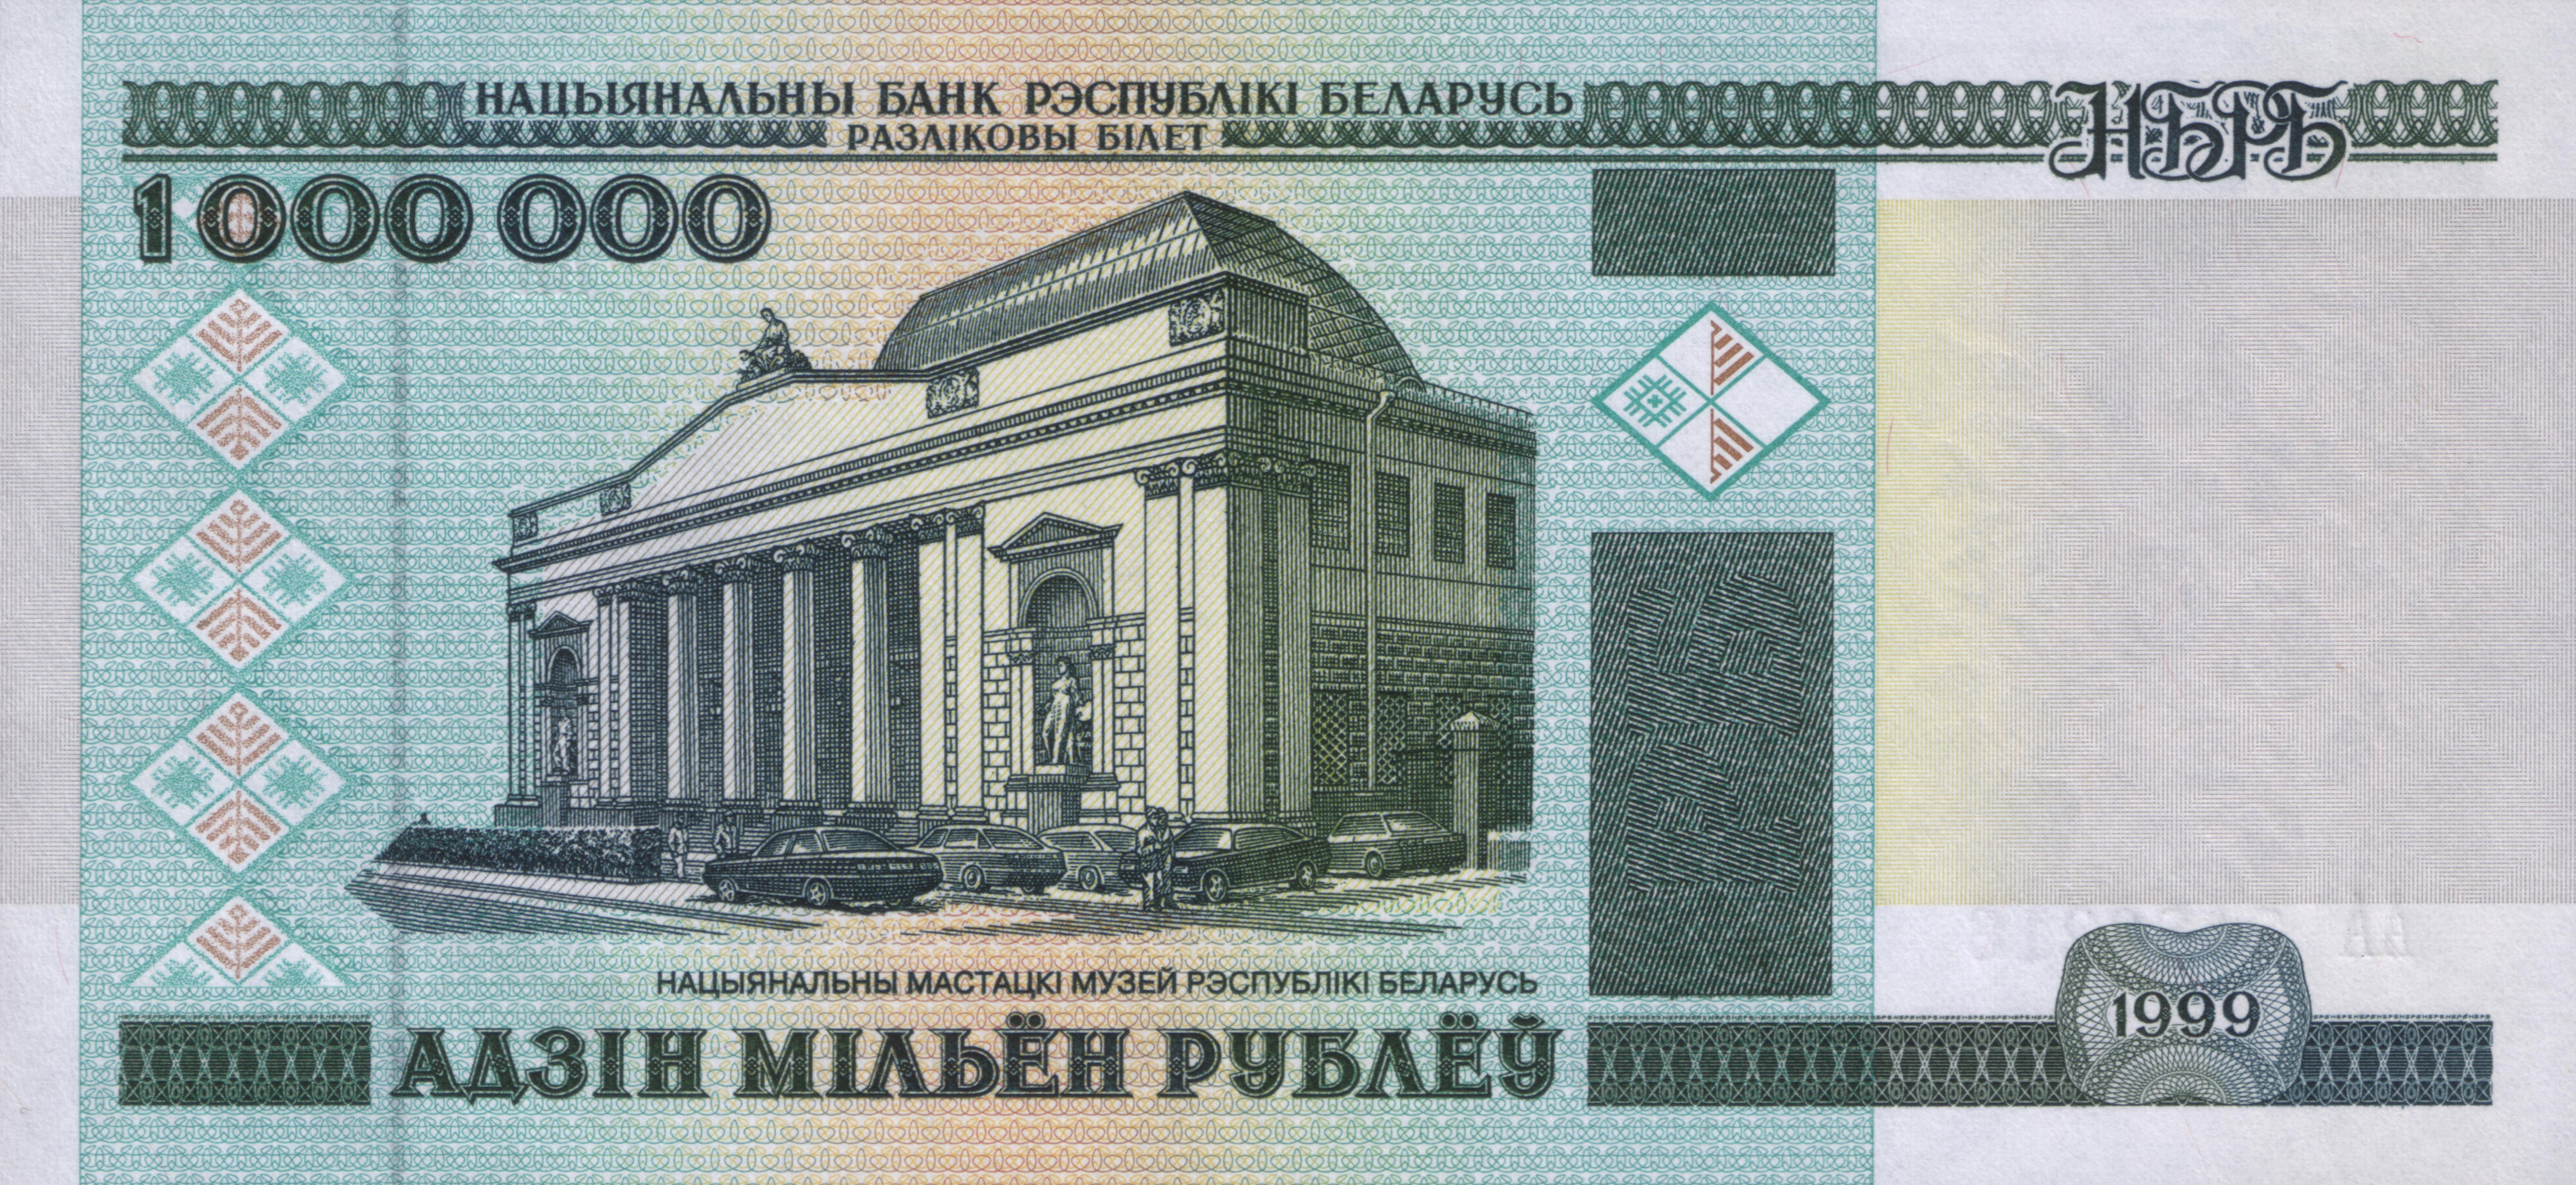 Belarus money photo